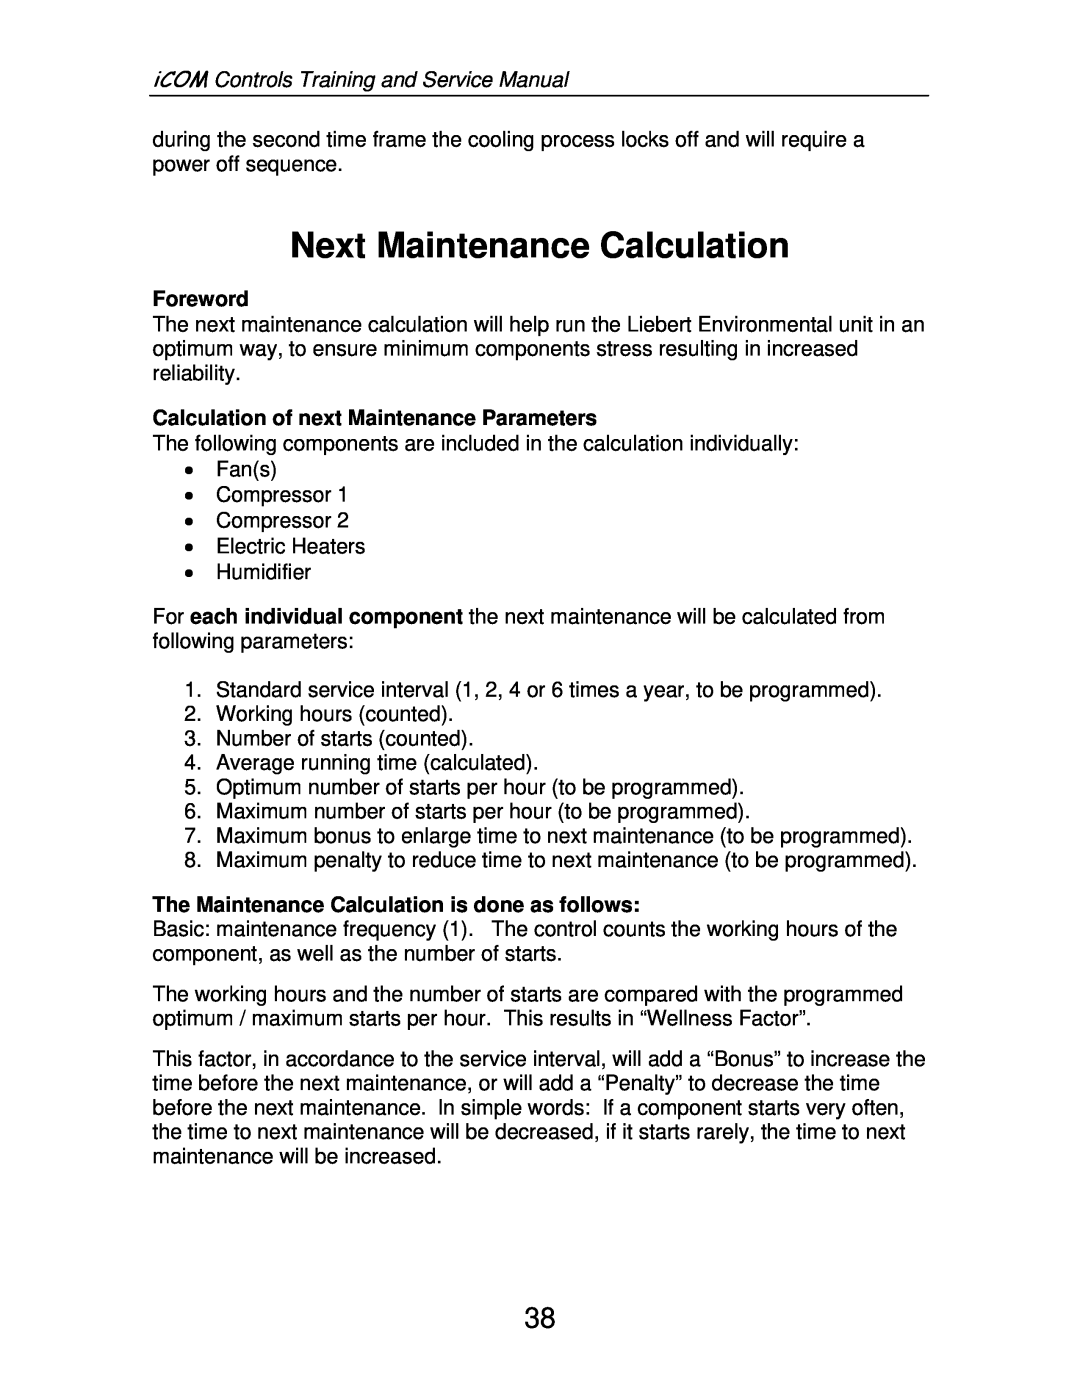 Liebert TM-10098 service manual Next Maintenance Calculation, iCOM Controls Training and Service Manual, Foreword 